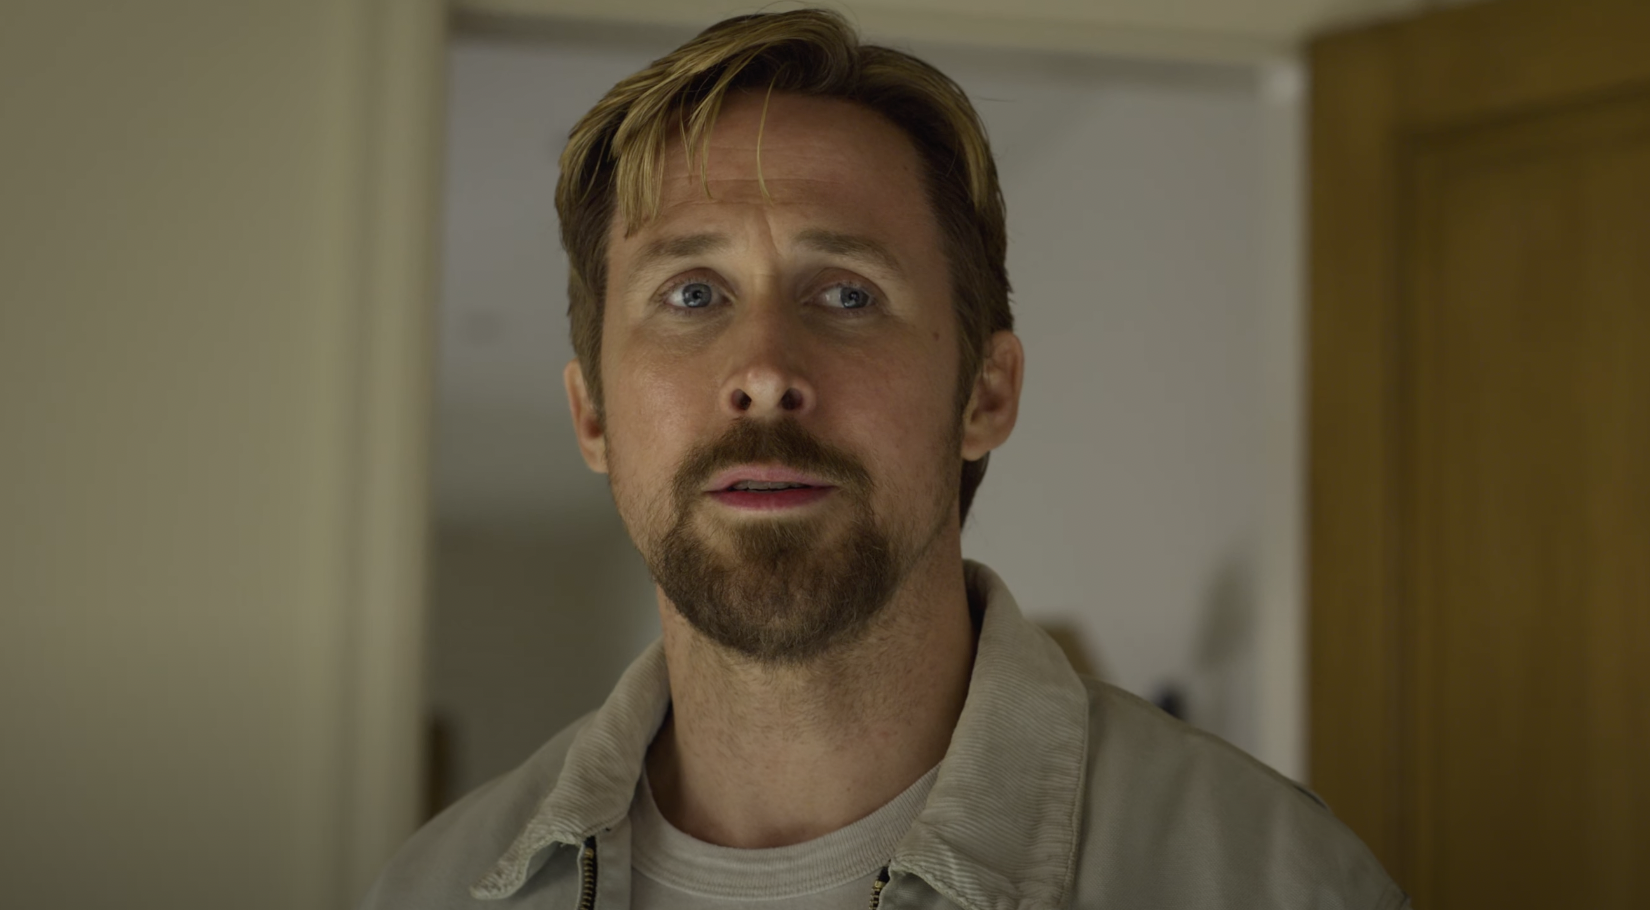 The Fall Guy (2024)  Ryan Gosling, Trailer News, Release Date